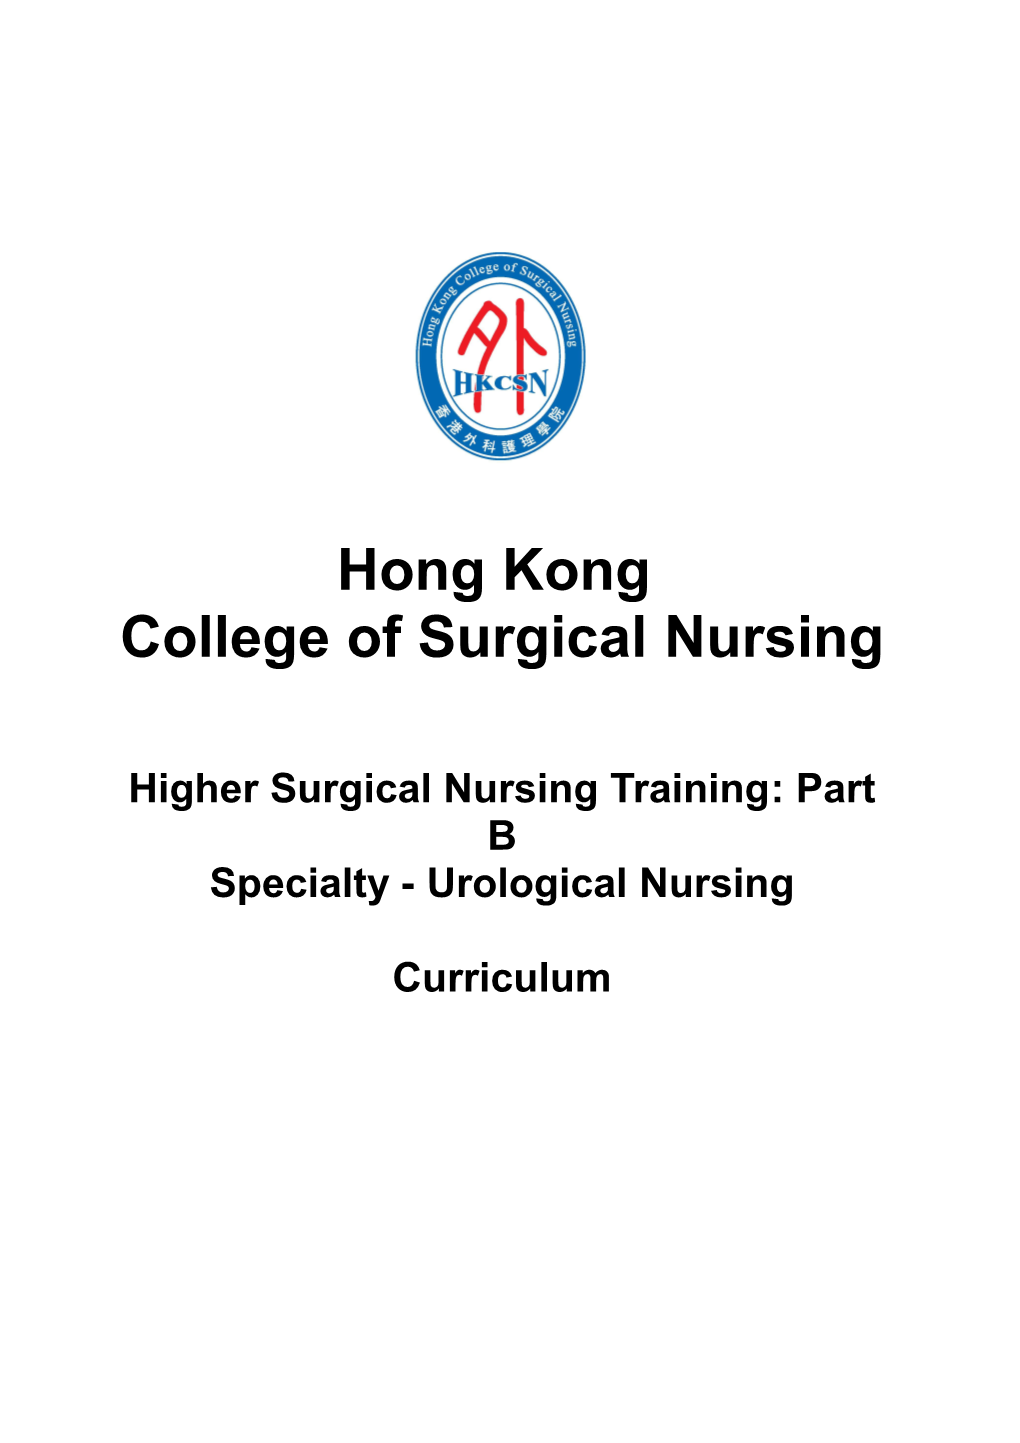 Higher Surgical Nursing Training: Part B